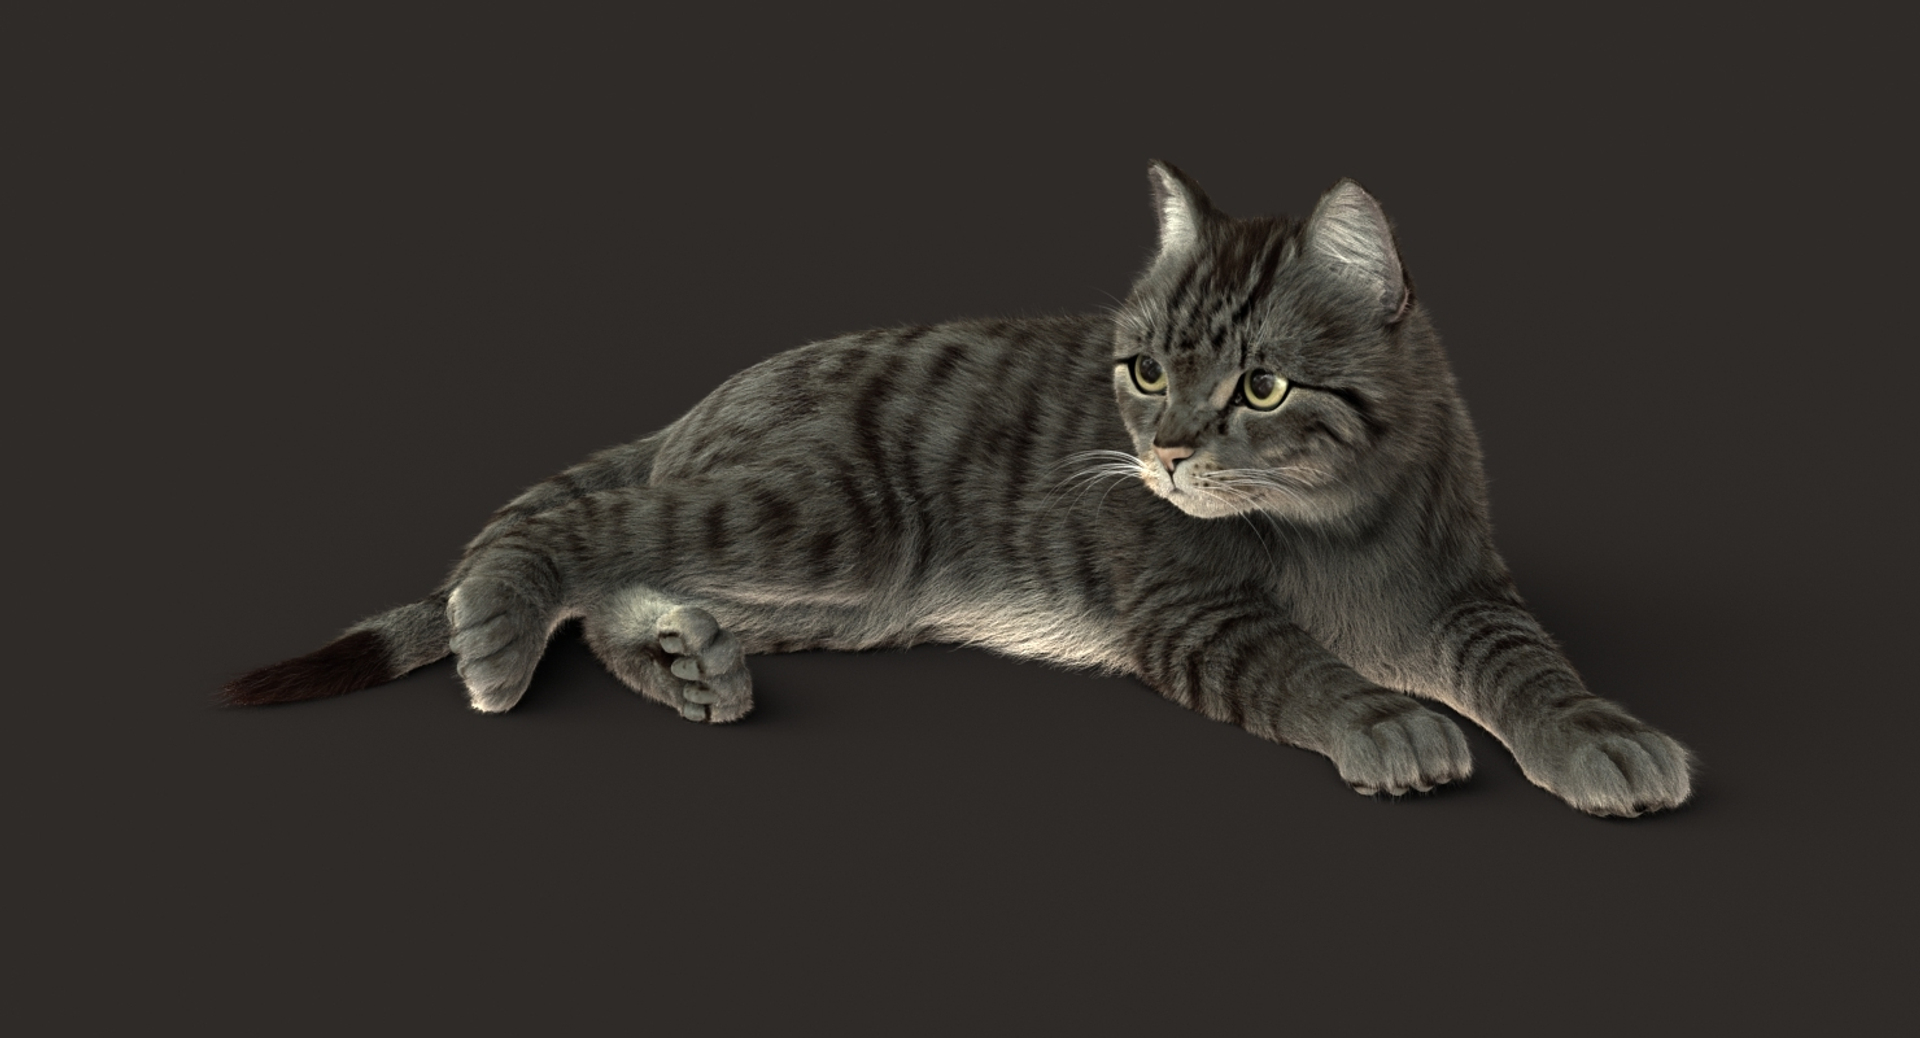 3D cat animation https://p.turbosquid.com/ts-thumb/5i/URL6KR/SxtRCIad/turn/jpg/1536824003/1920x1080/turn_fit_q99/2c42397539e78b4ba5b1c1766a84de45b07b1ae6/turn-1.jpg